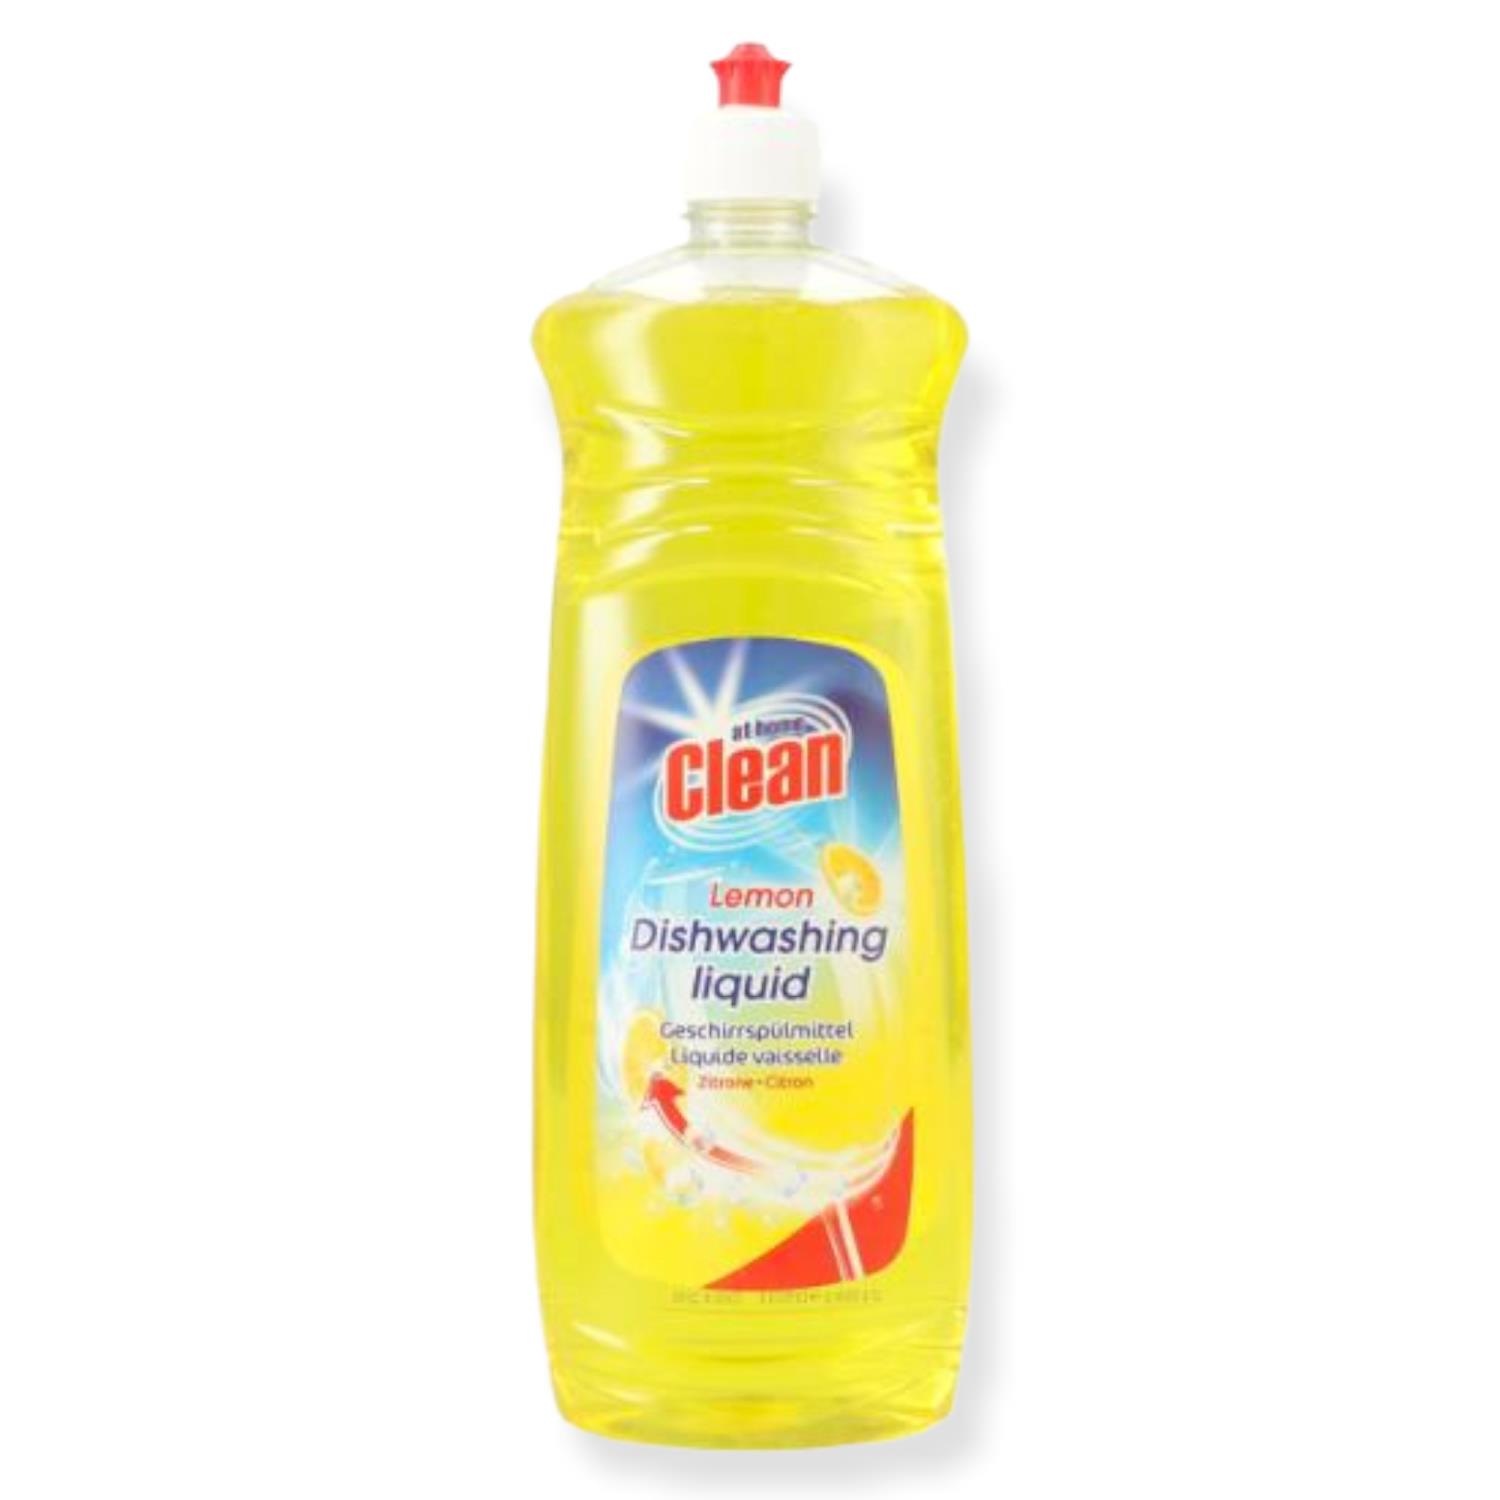 At Home Clean Lemon Dishwashing Liquid 1L